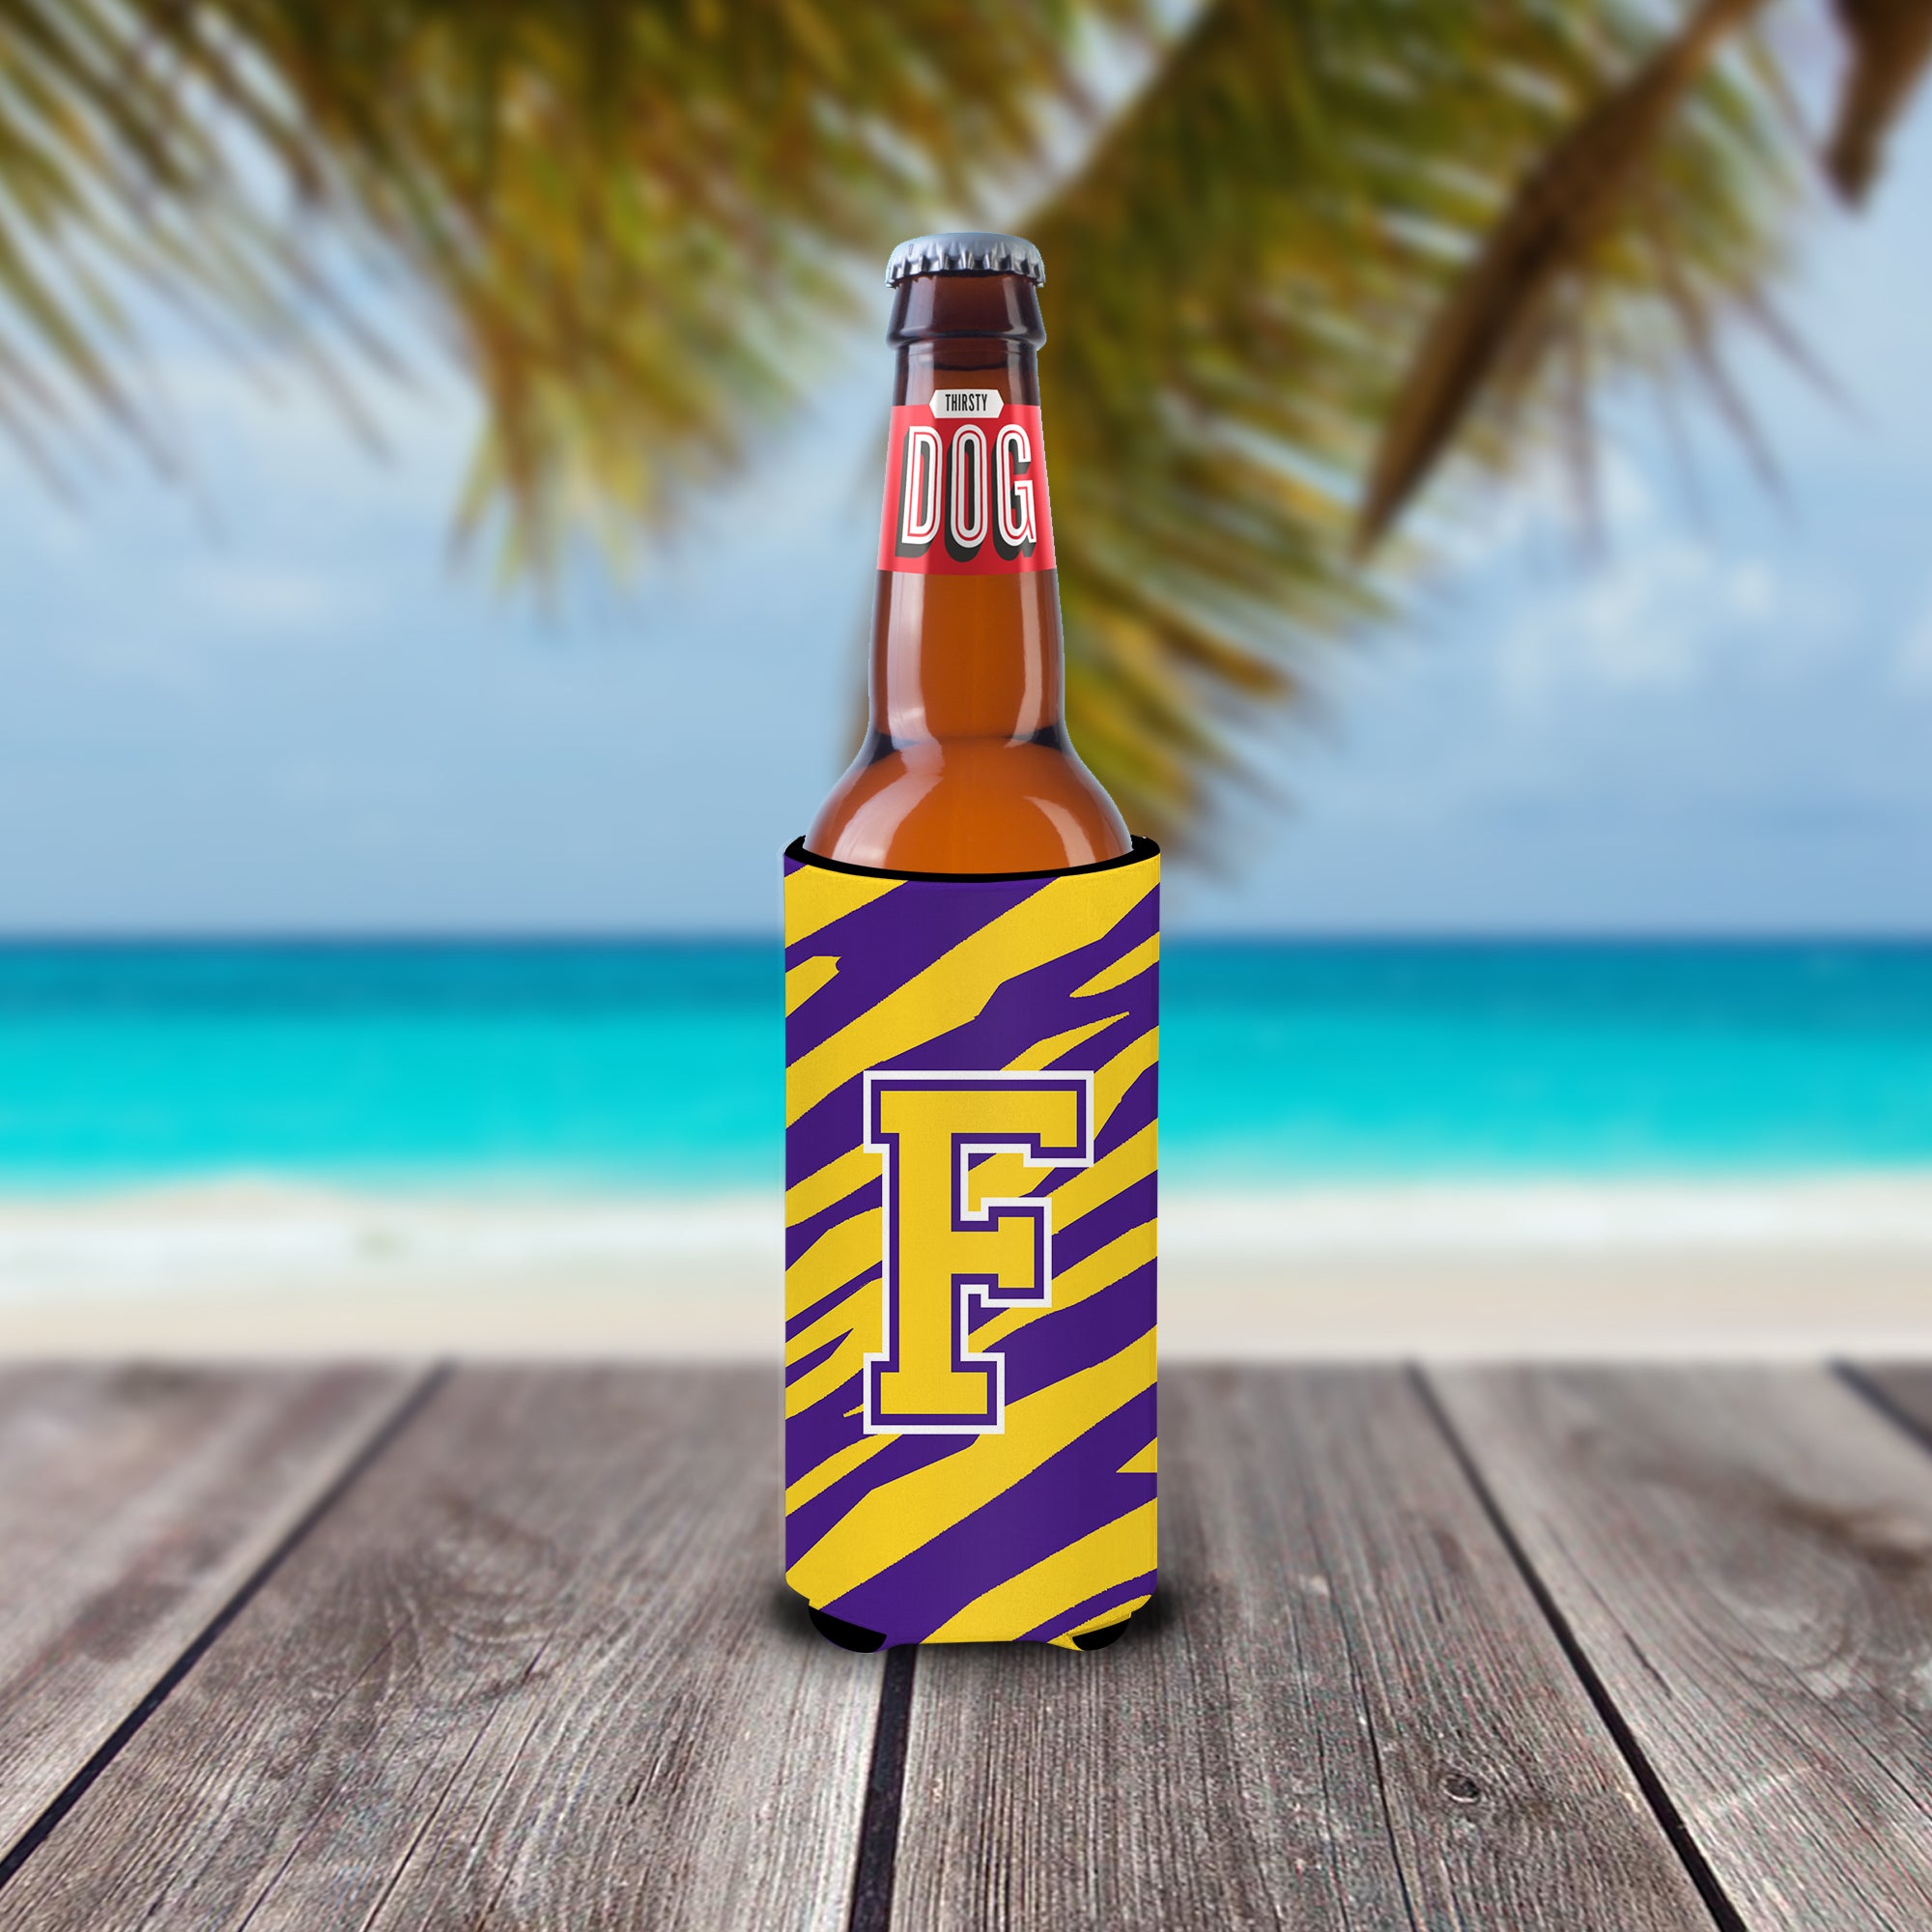 Monogram - Tiger Stripe - Purple Gold  Letter F Ultra Beverage Insulators for slim cans CJ1022-FMUK